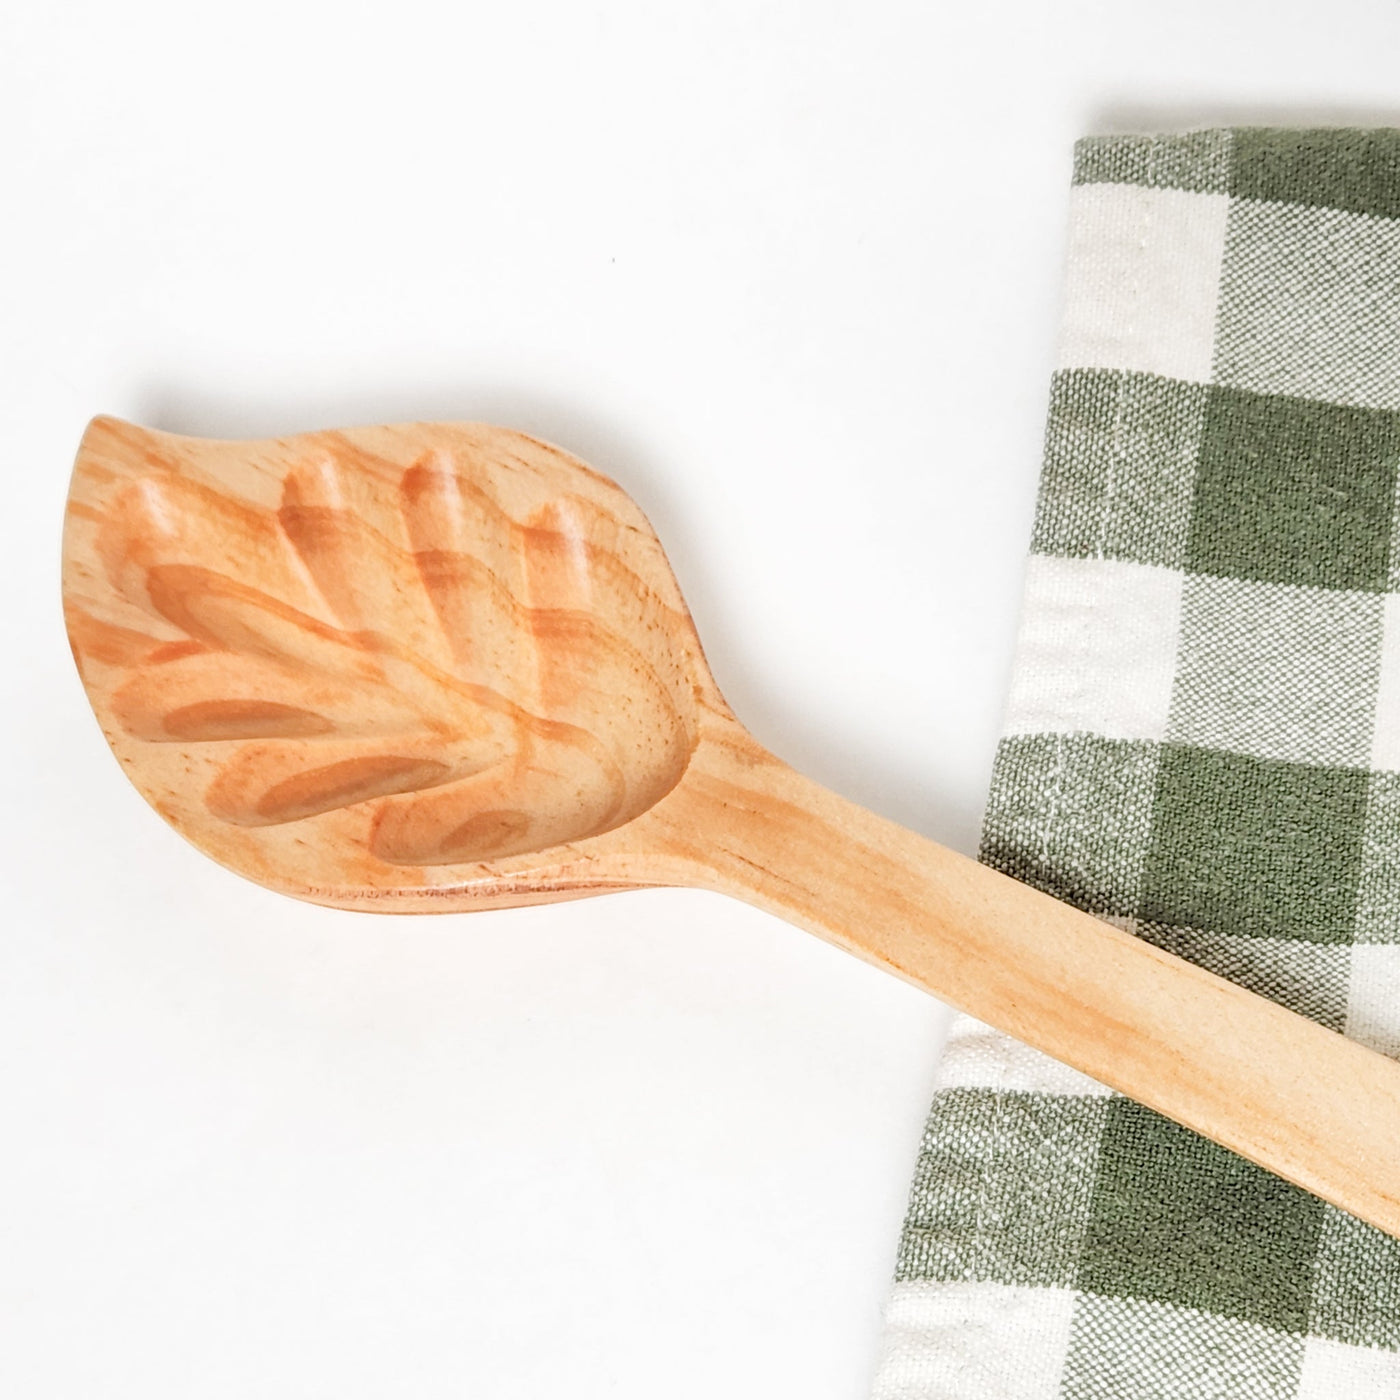 Hand Carved Wood Leaf Spoon